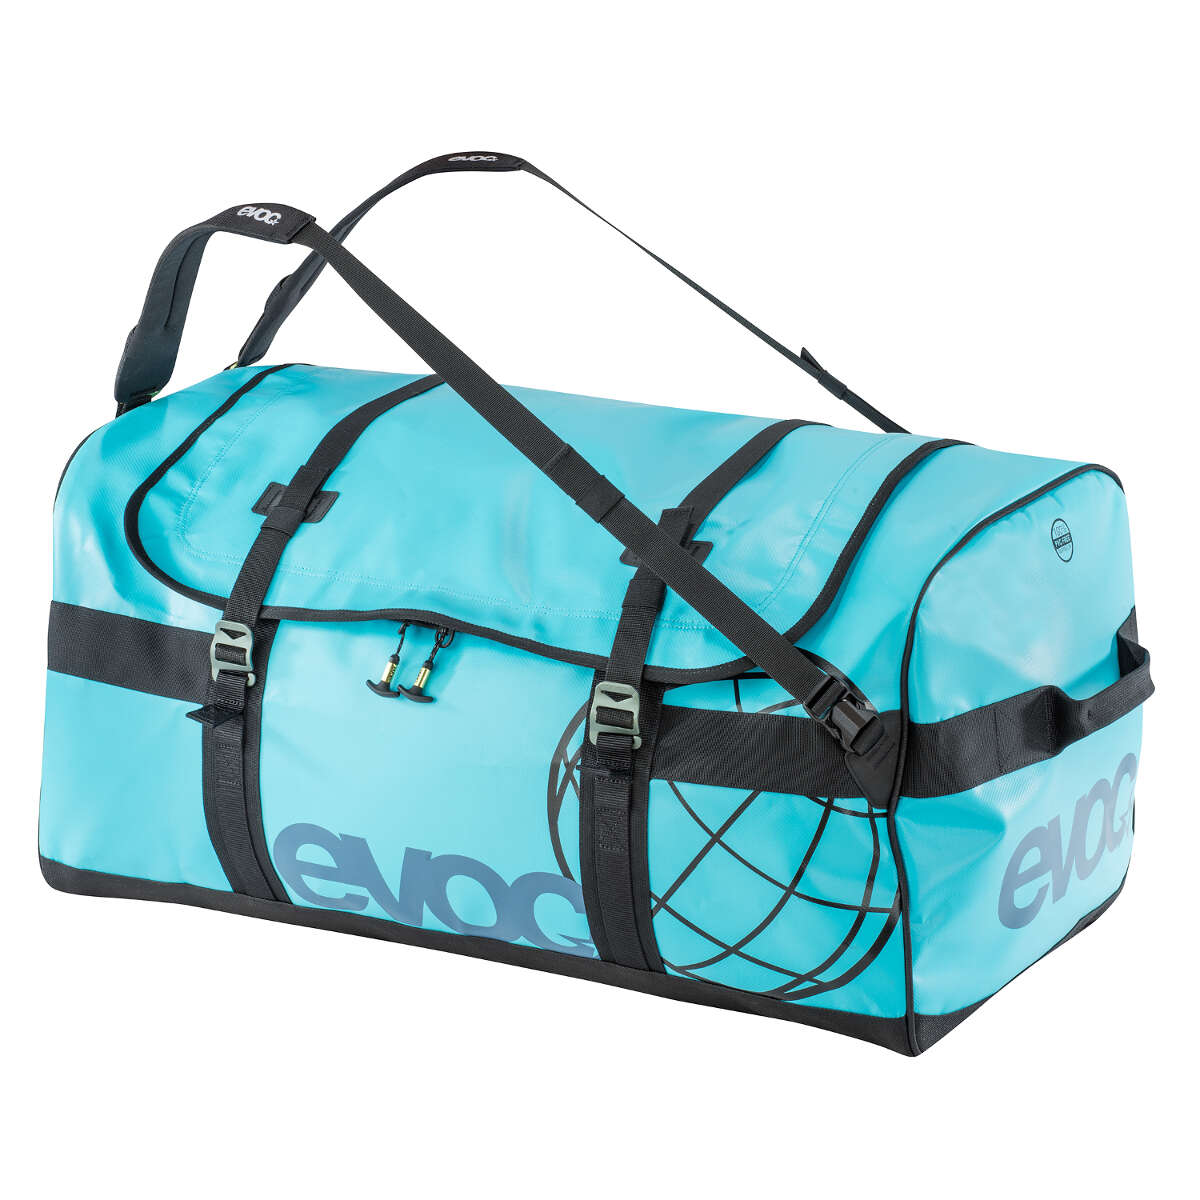 Evoc Sac de Voyage Duffle Bag Neon Bleu, 60 Litre